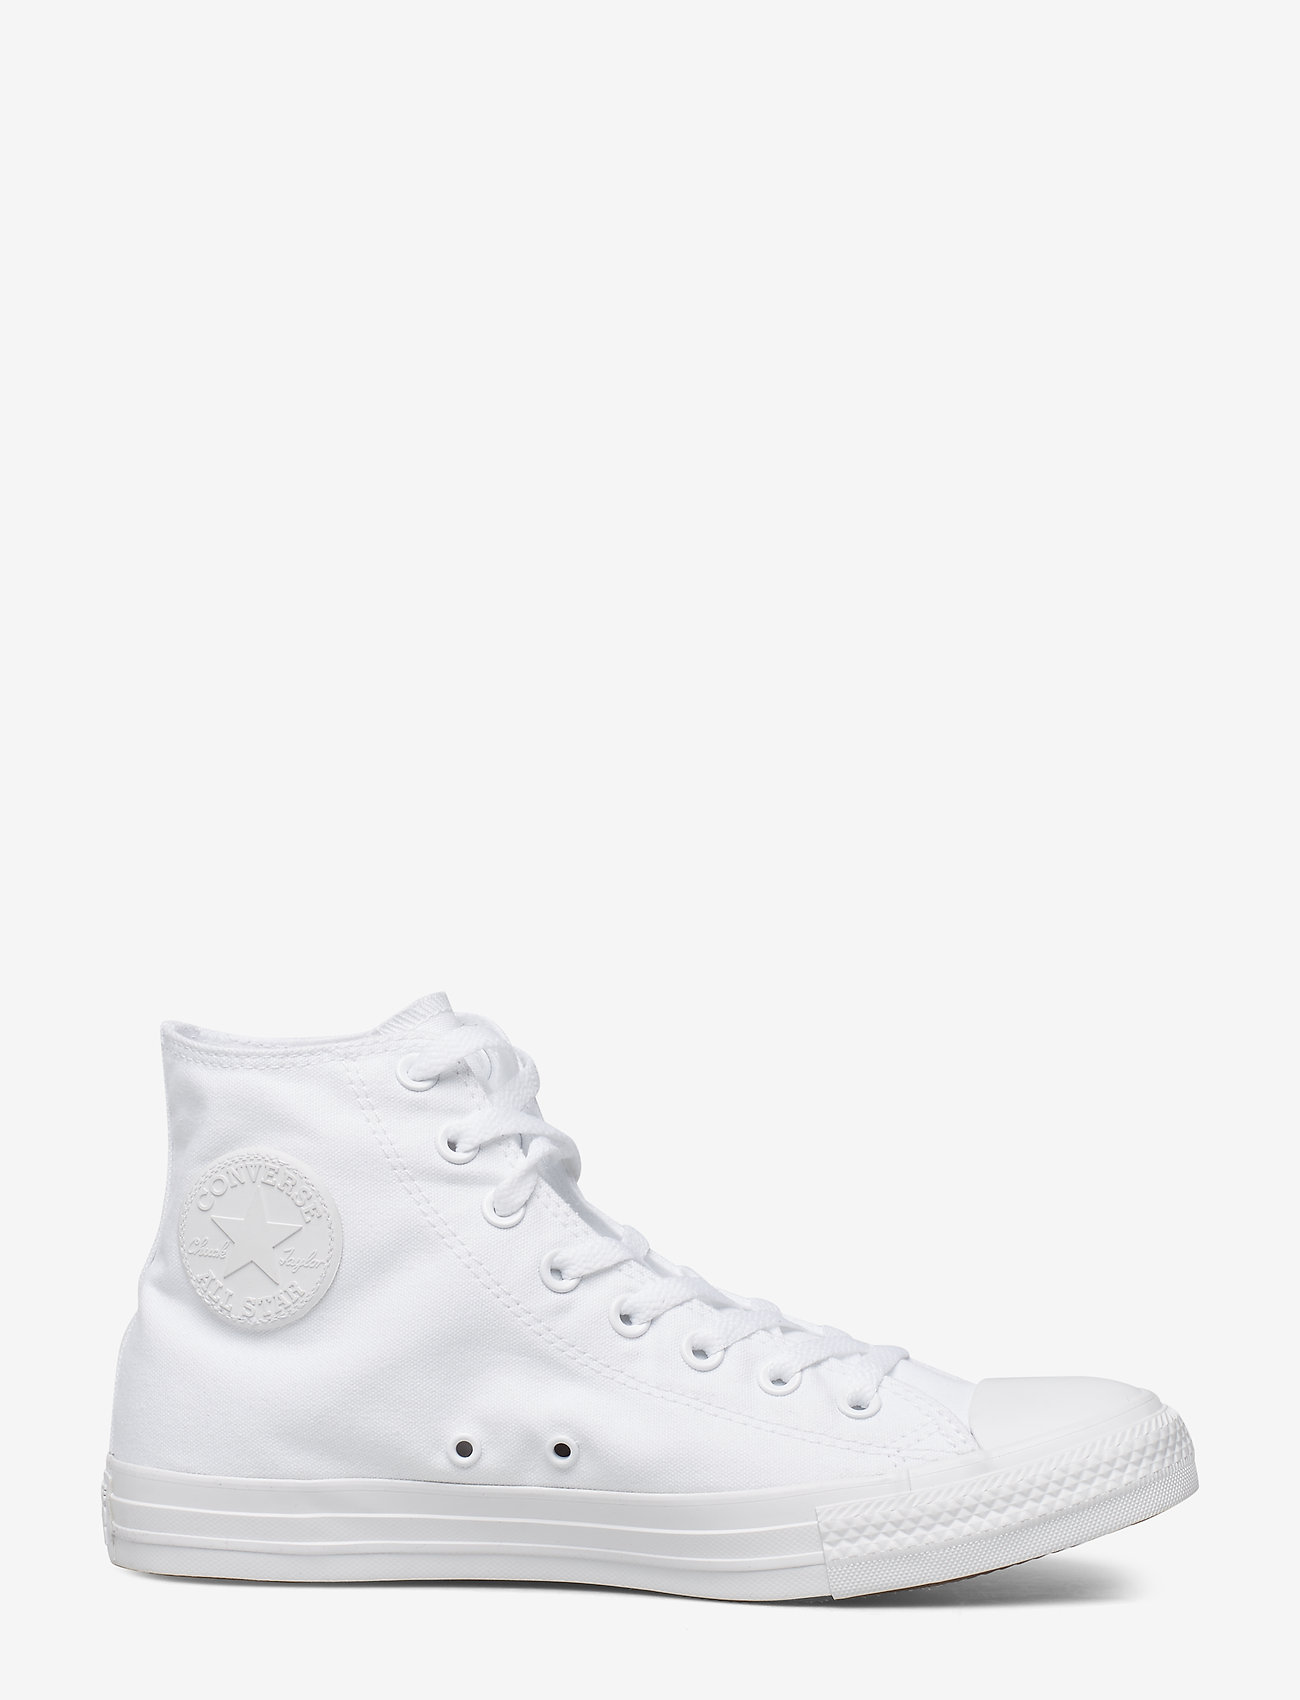 Converse - Chuck Taylor All Star Seasonal - høje sneakers - white monochrome - 1